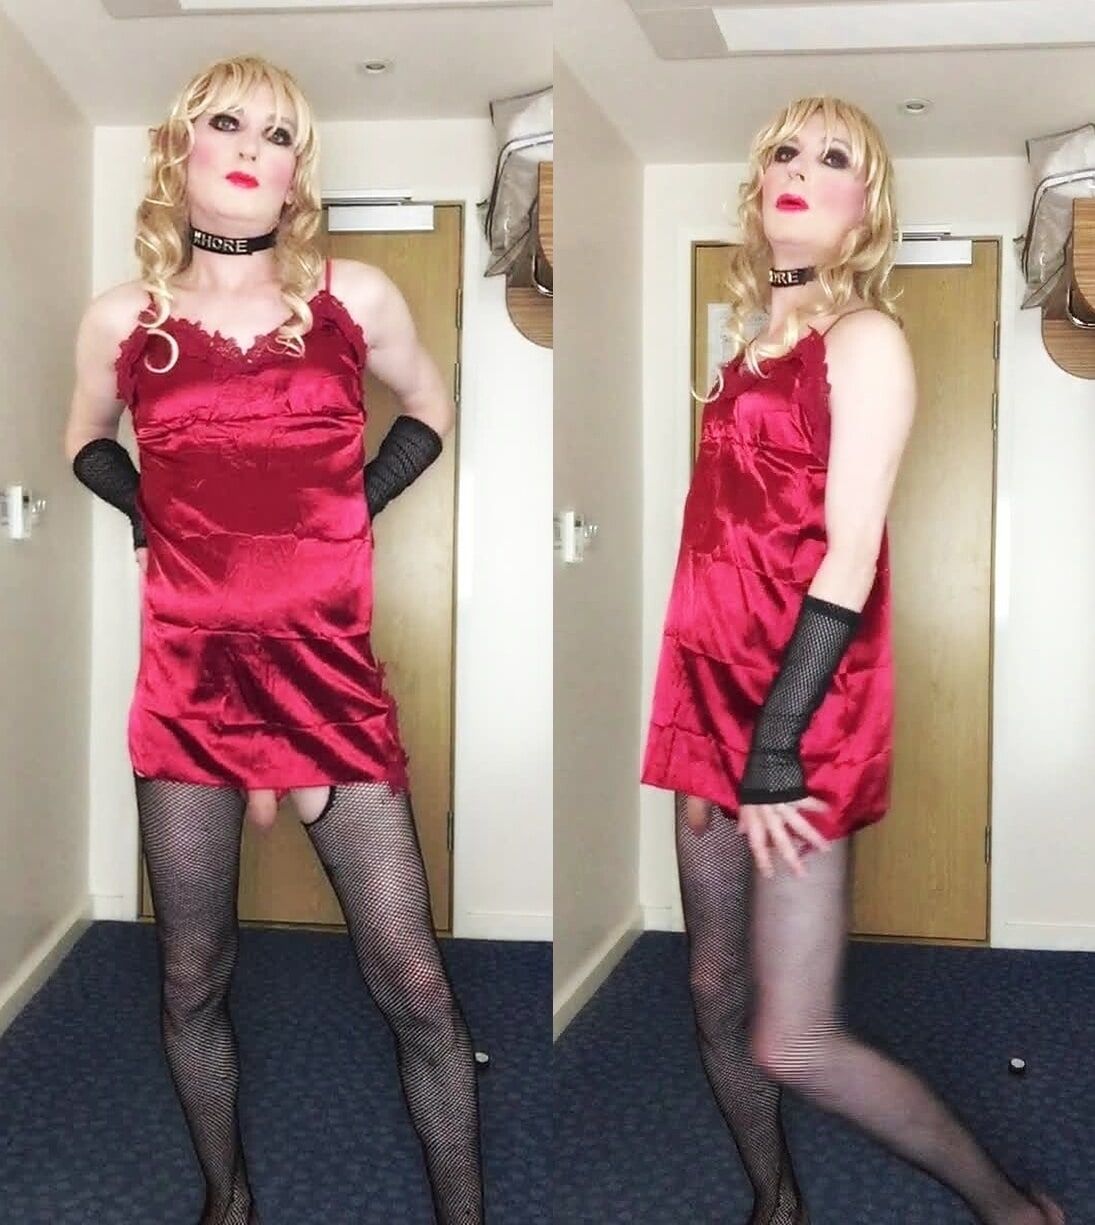 Skanky sissy in red dress #14